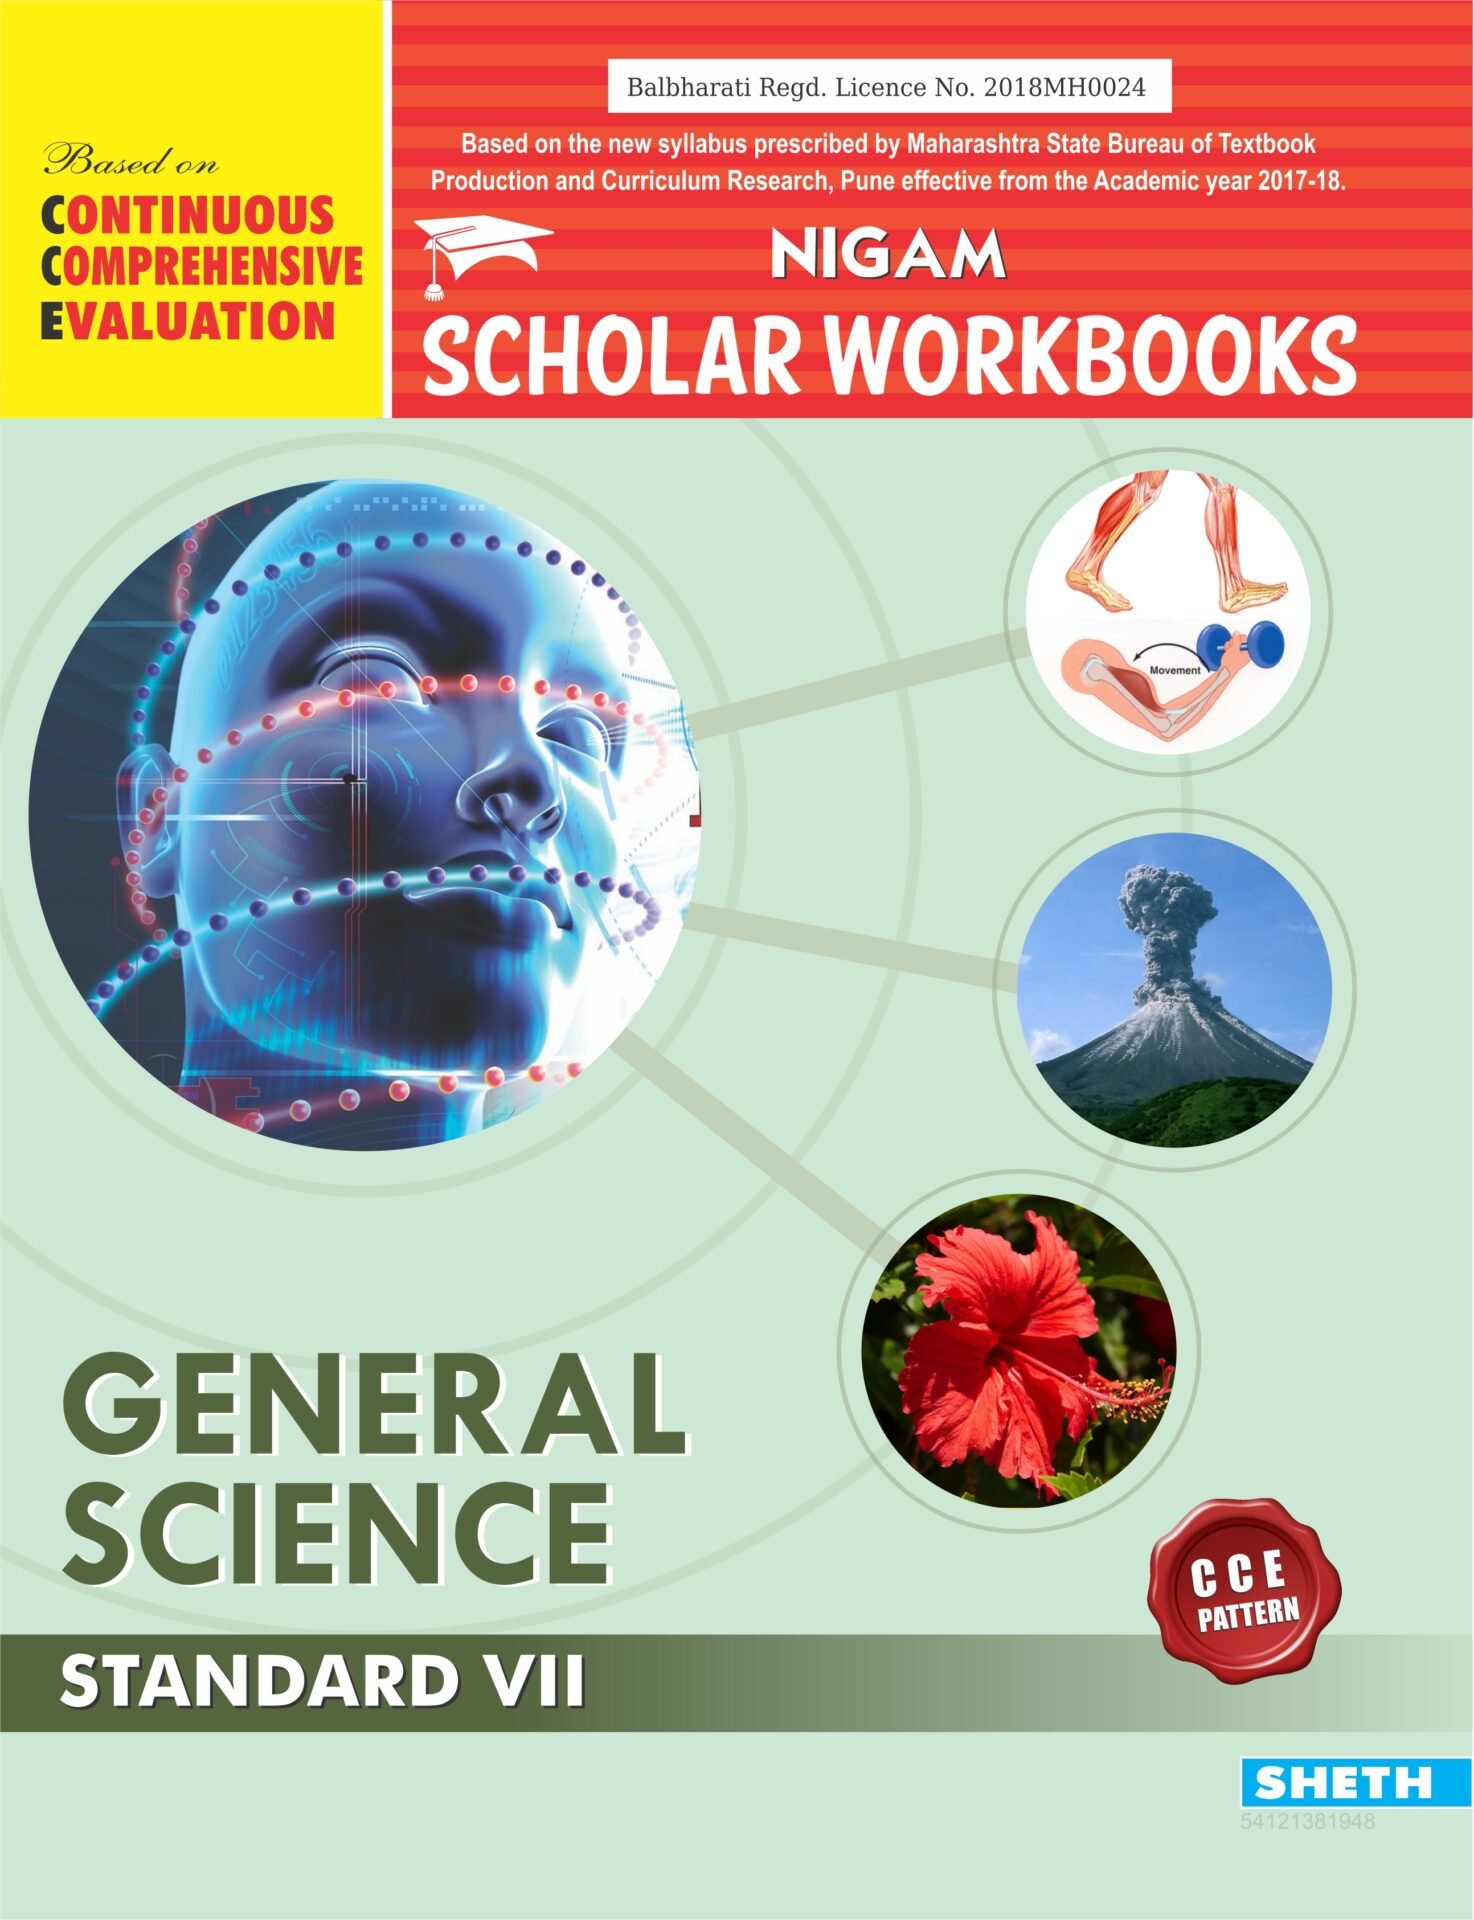 CCE Pattern Nigam Scholar Workbooks General Science Standard 7 1